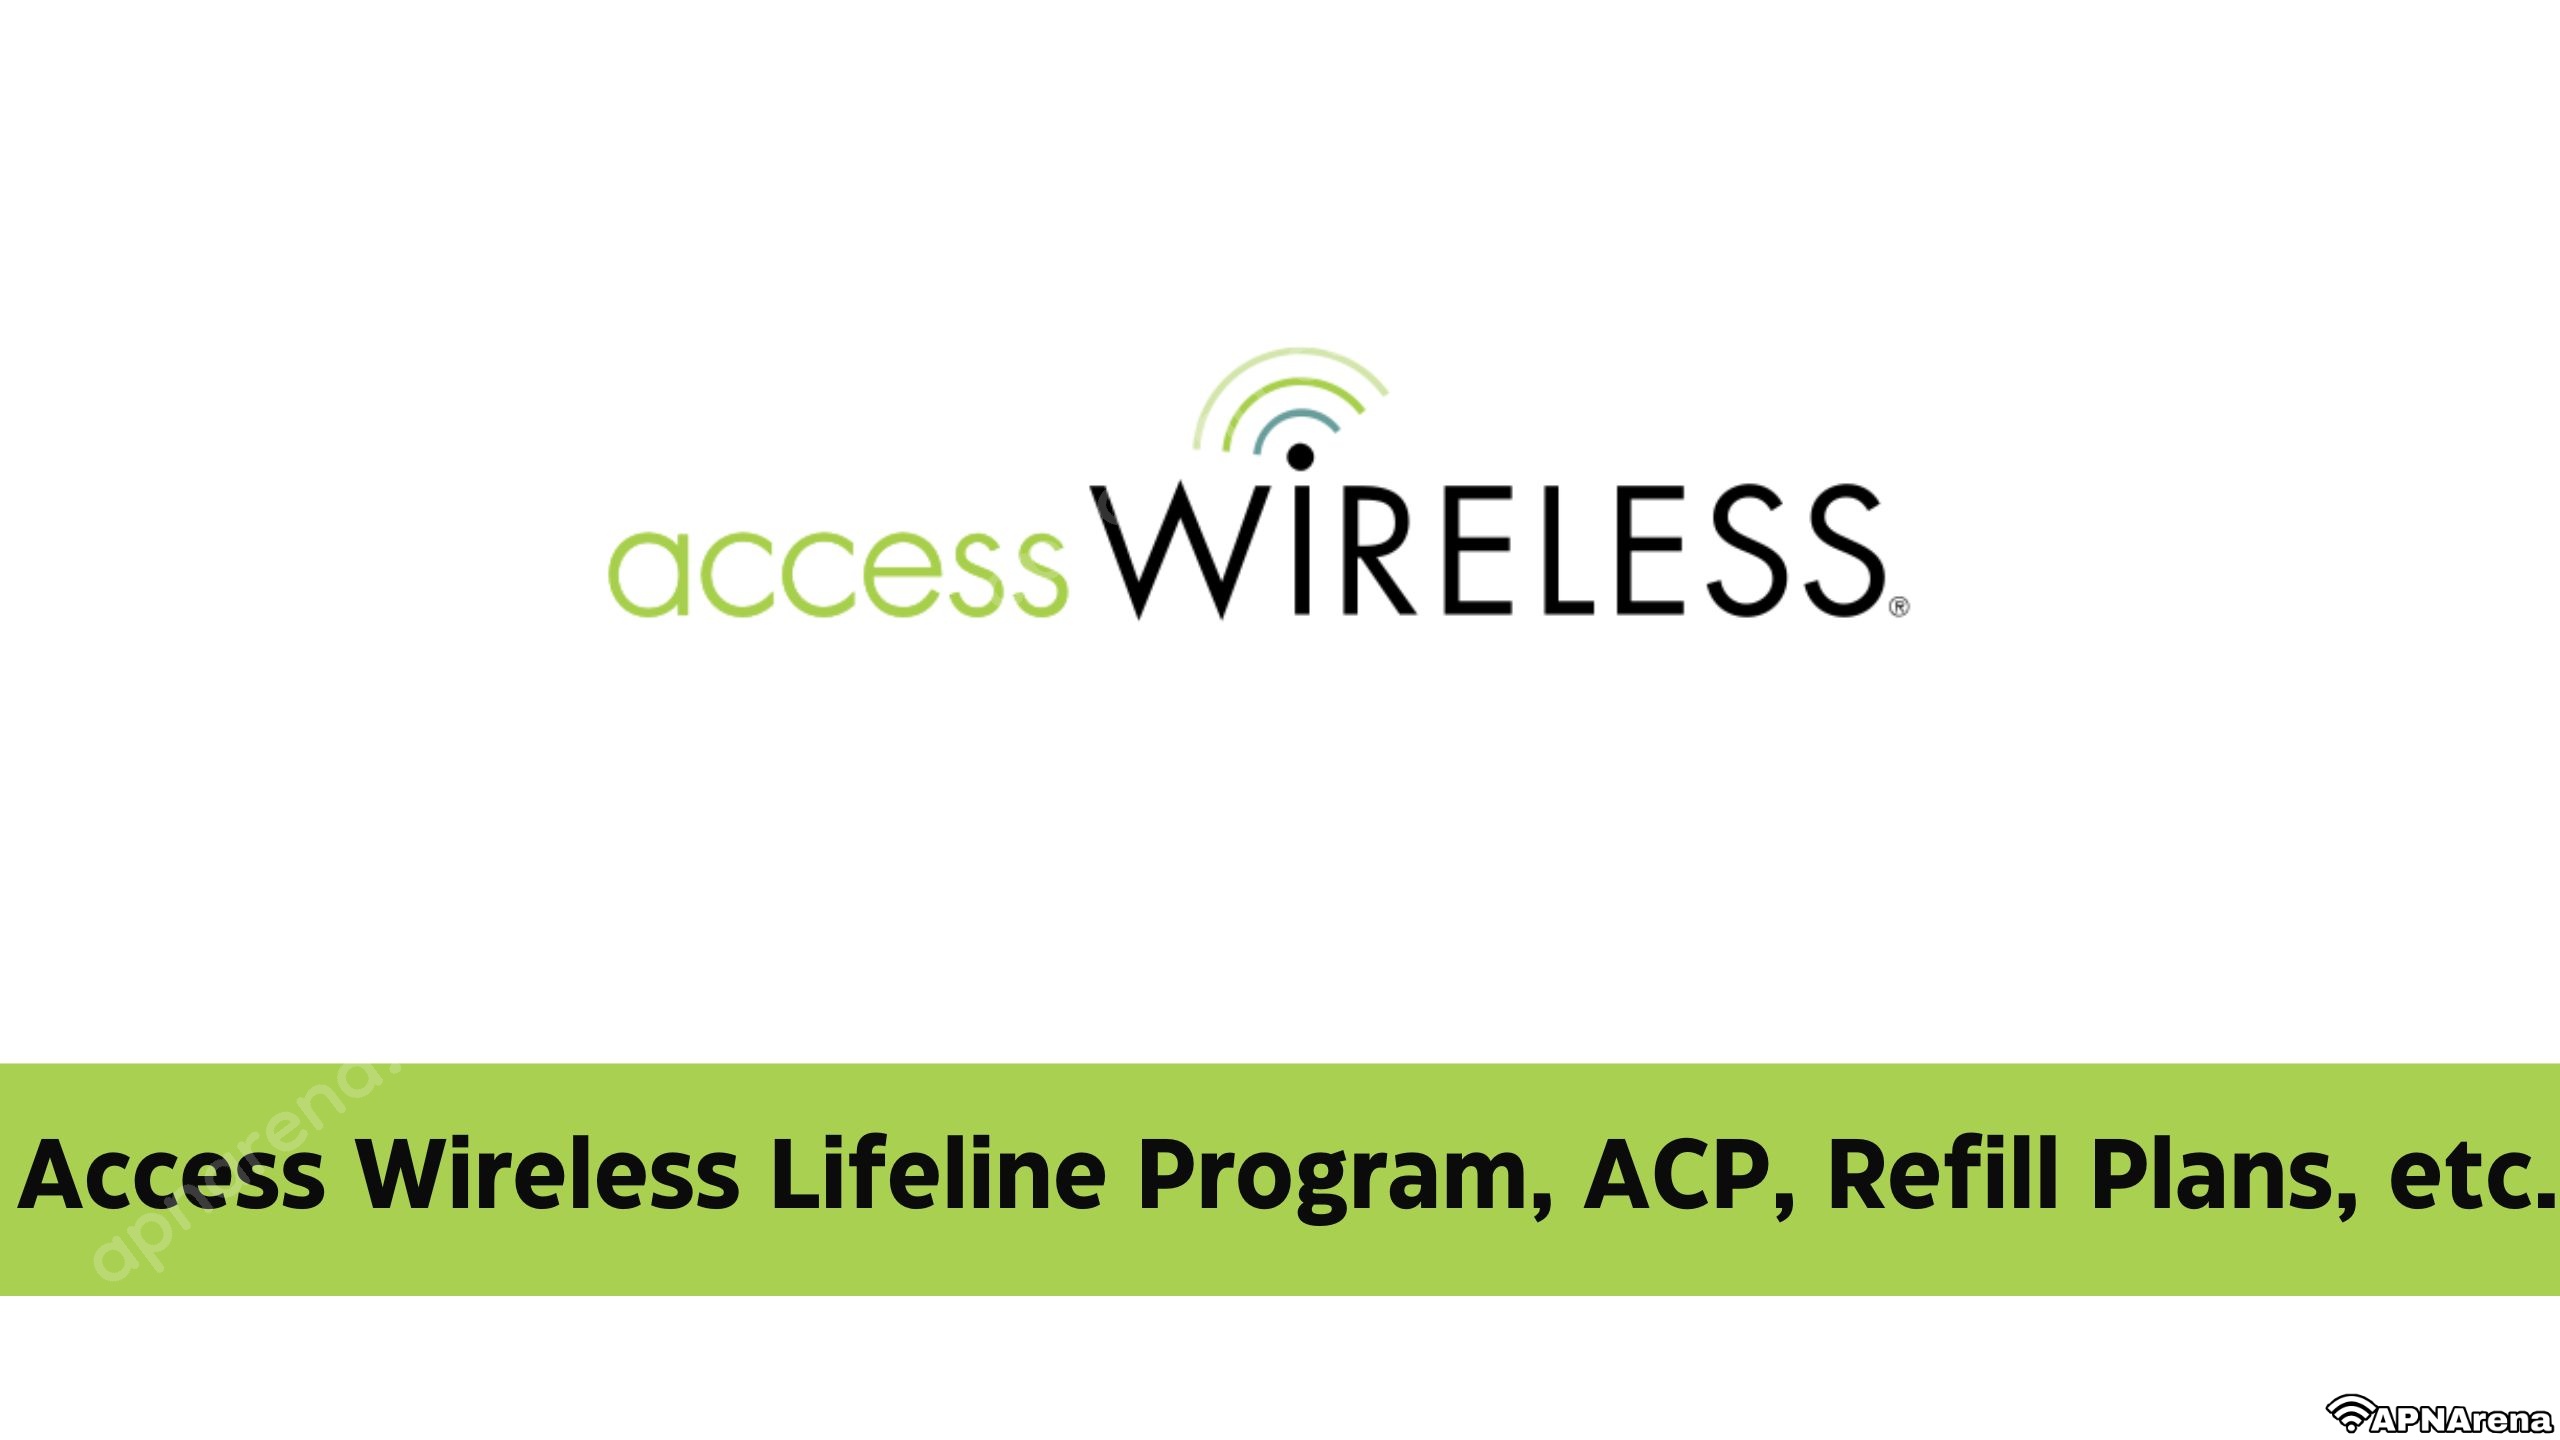 Access Wireless Data Plans, Lifeline Application, ACP, Customer care, etc